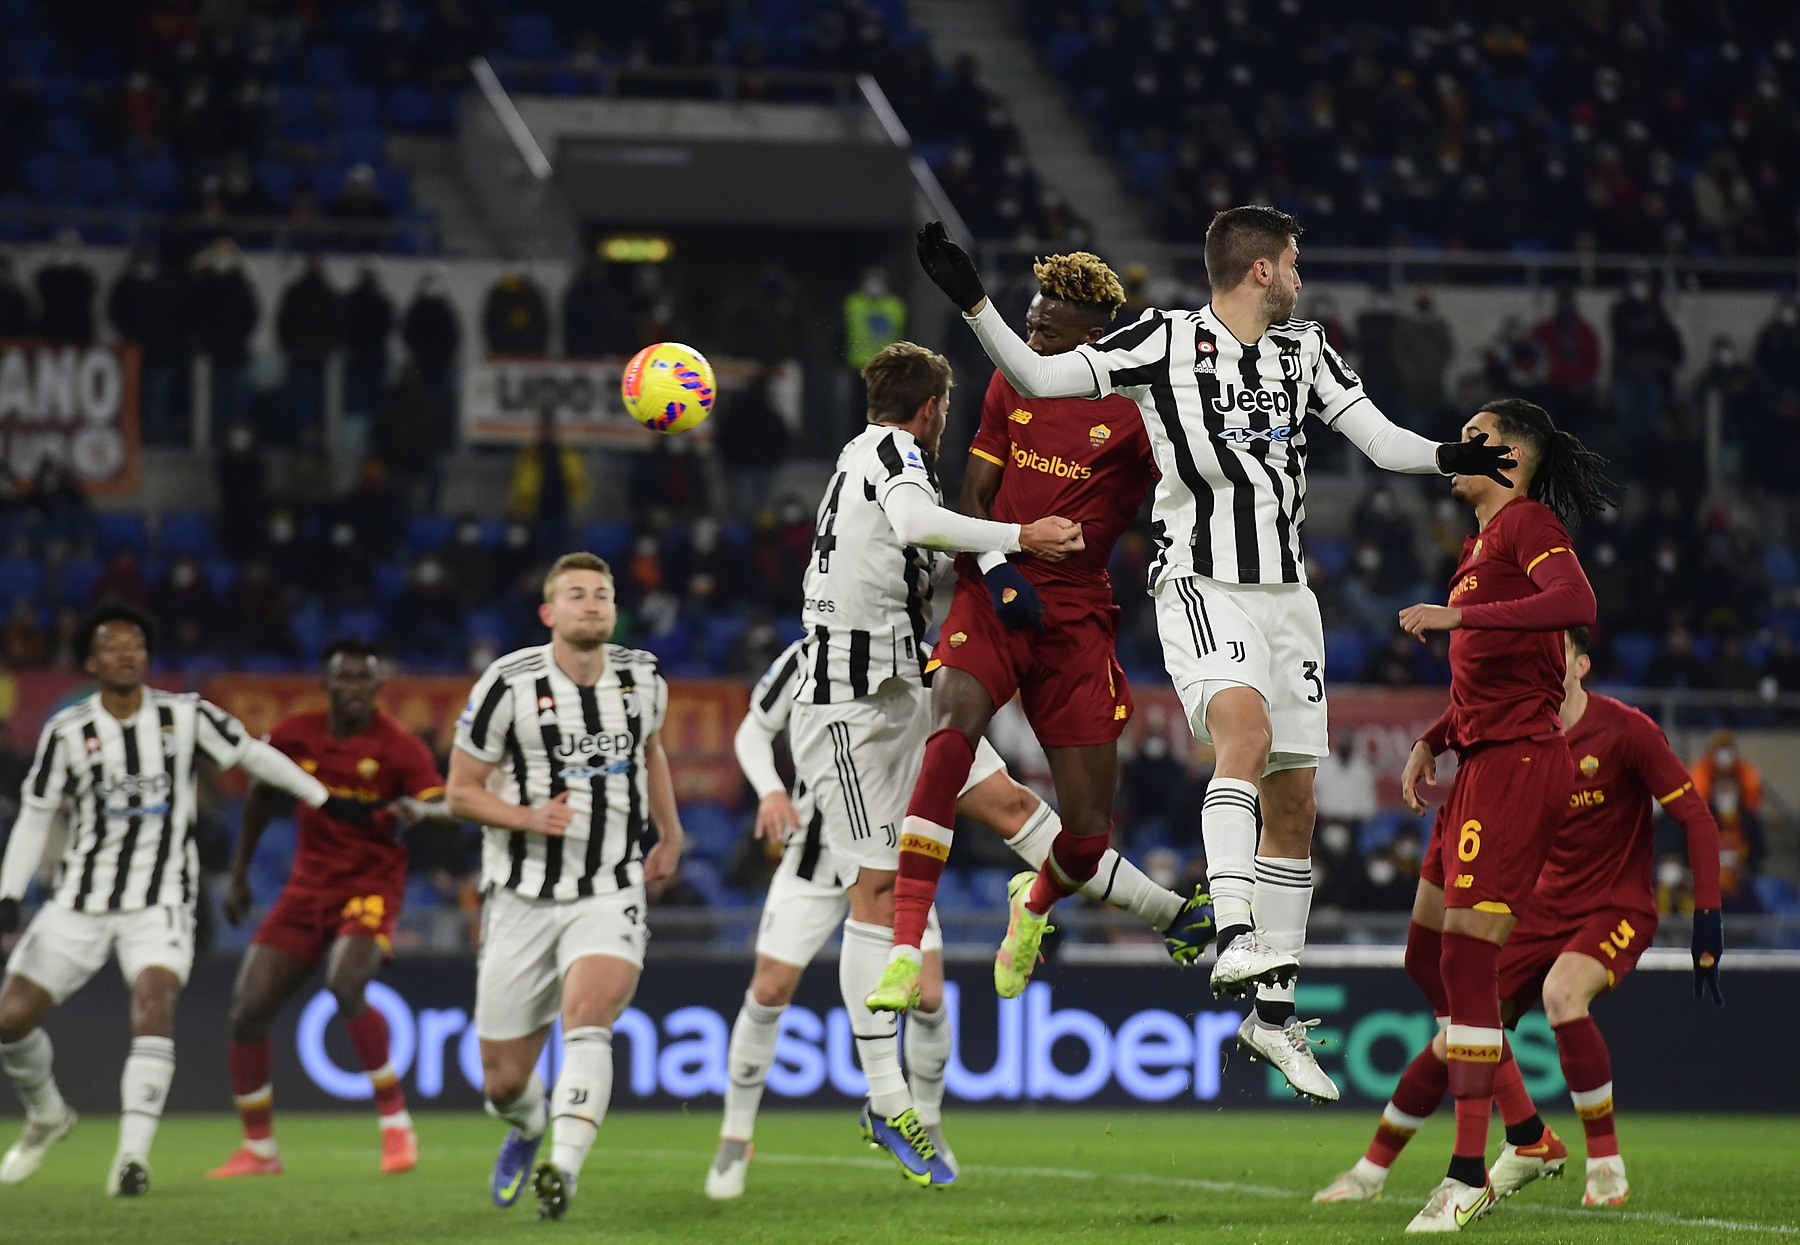 Serie A: Juventus Turyn – AS Roma. Zapowiedź, analiza, typy